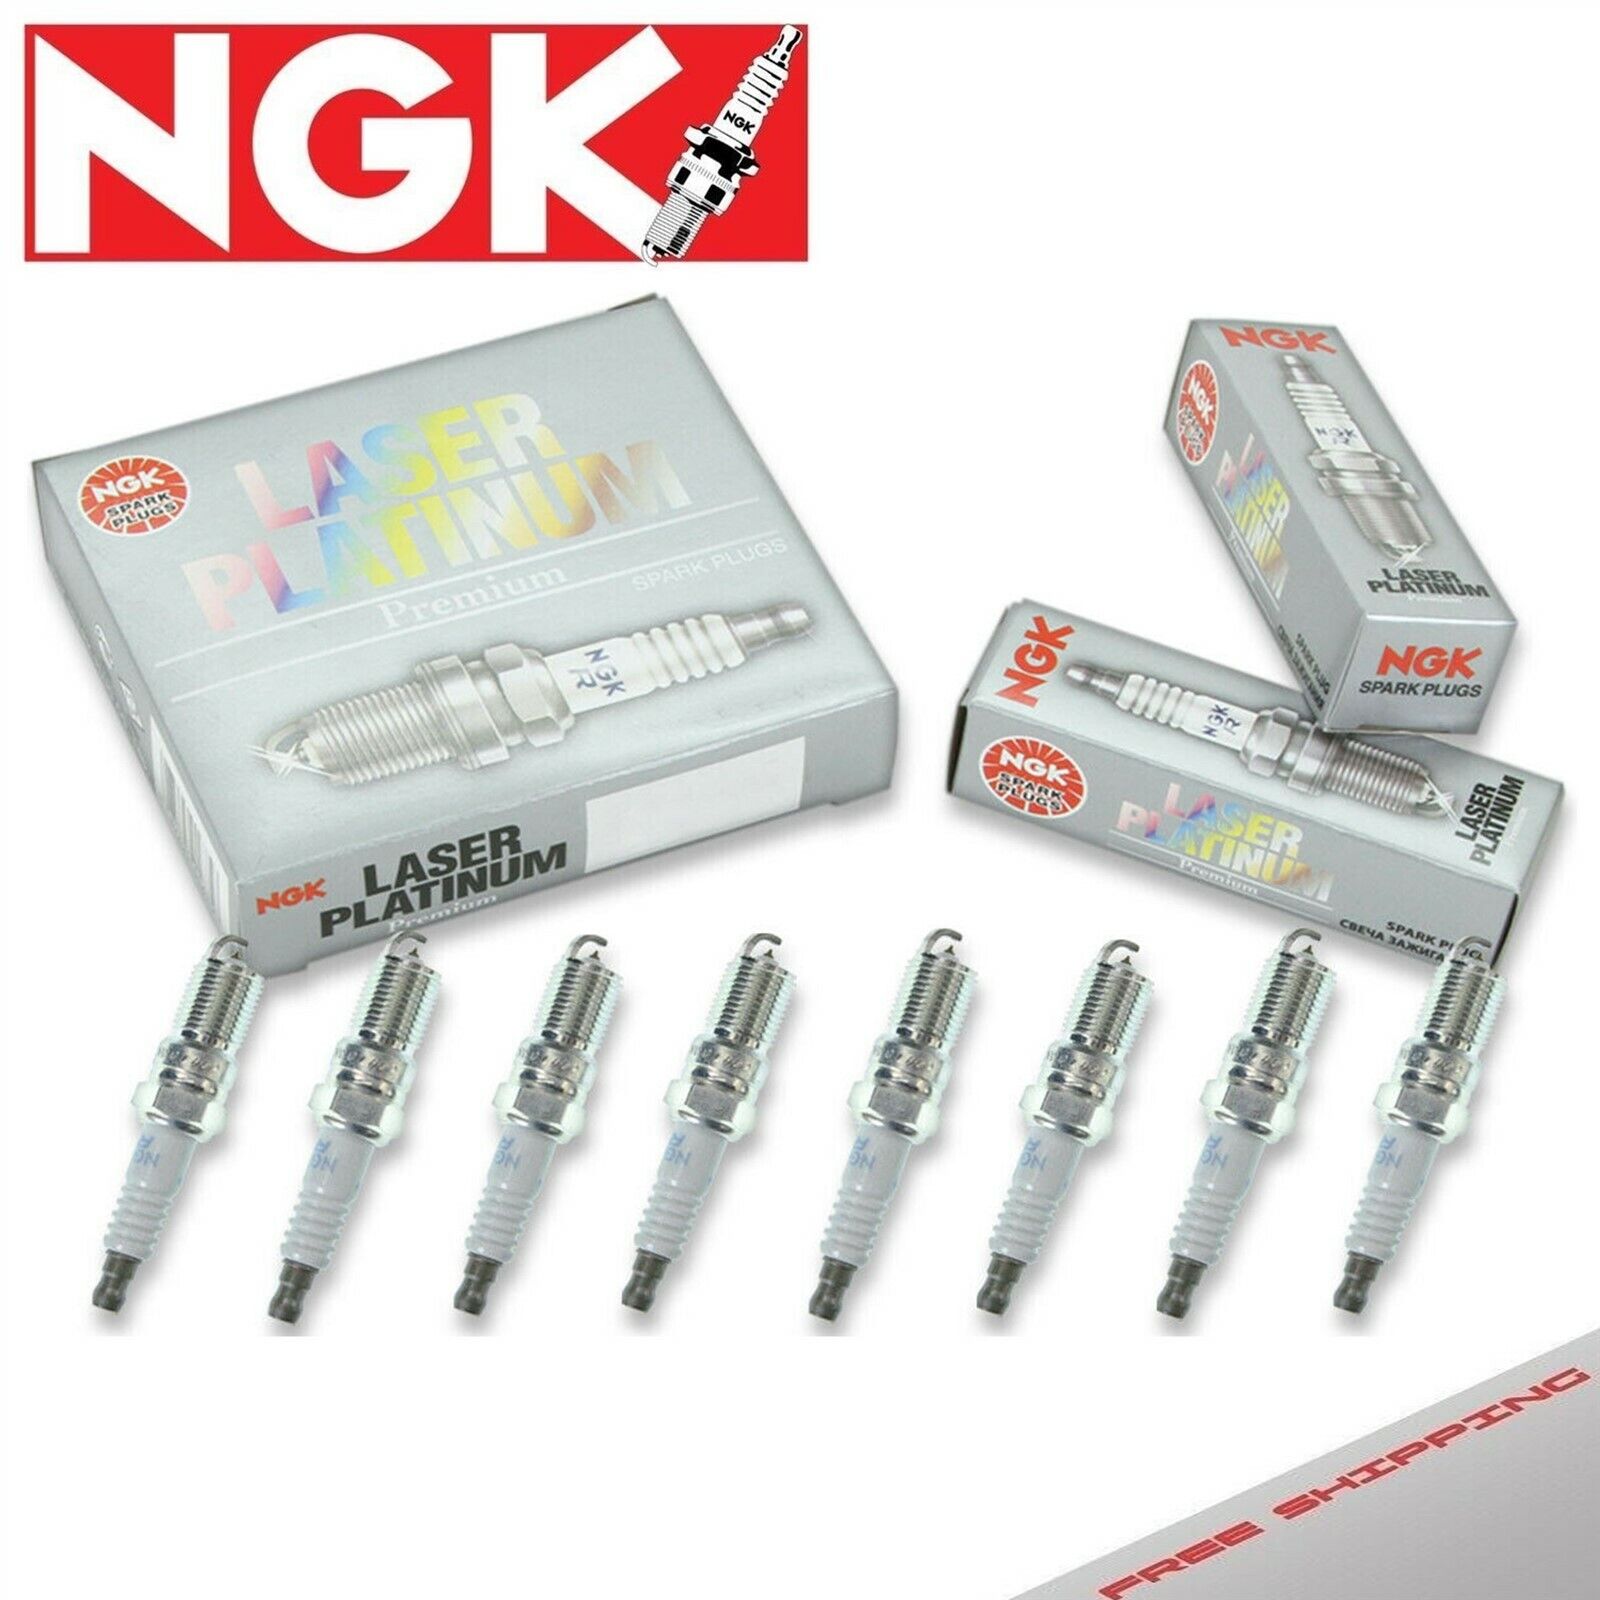 8 x Spark Plugs Made in Japan NGK Laser Platinum 3586 PZFR6J-11 3586 PZFR6J11